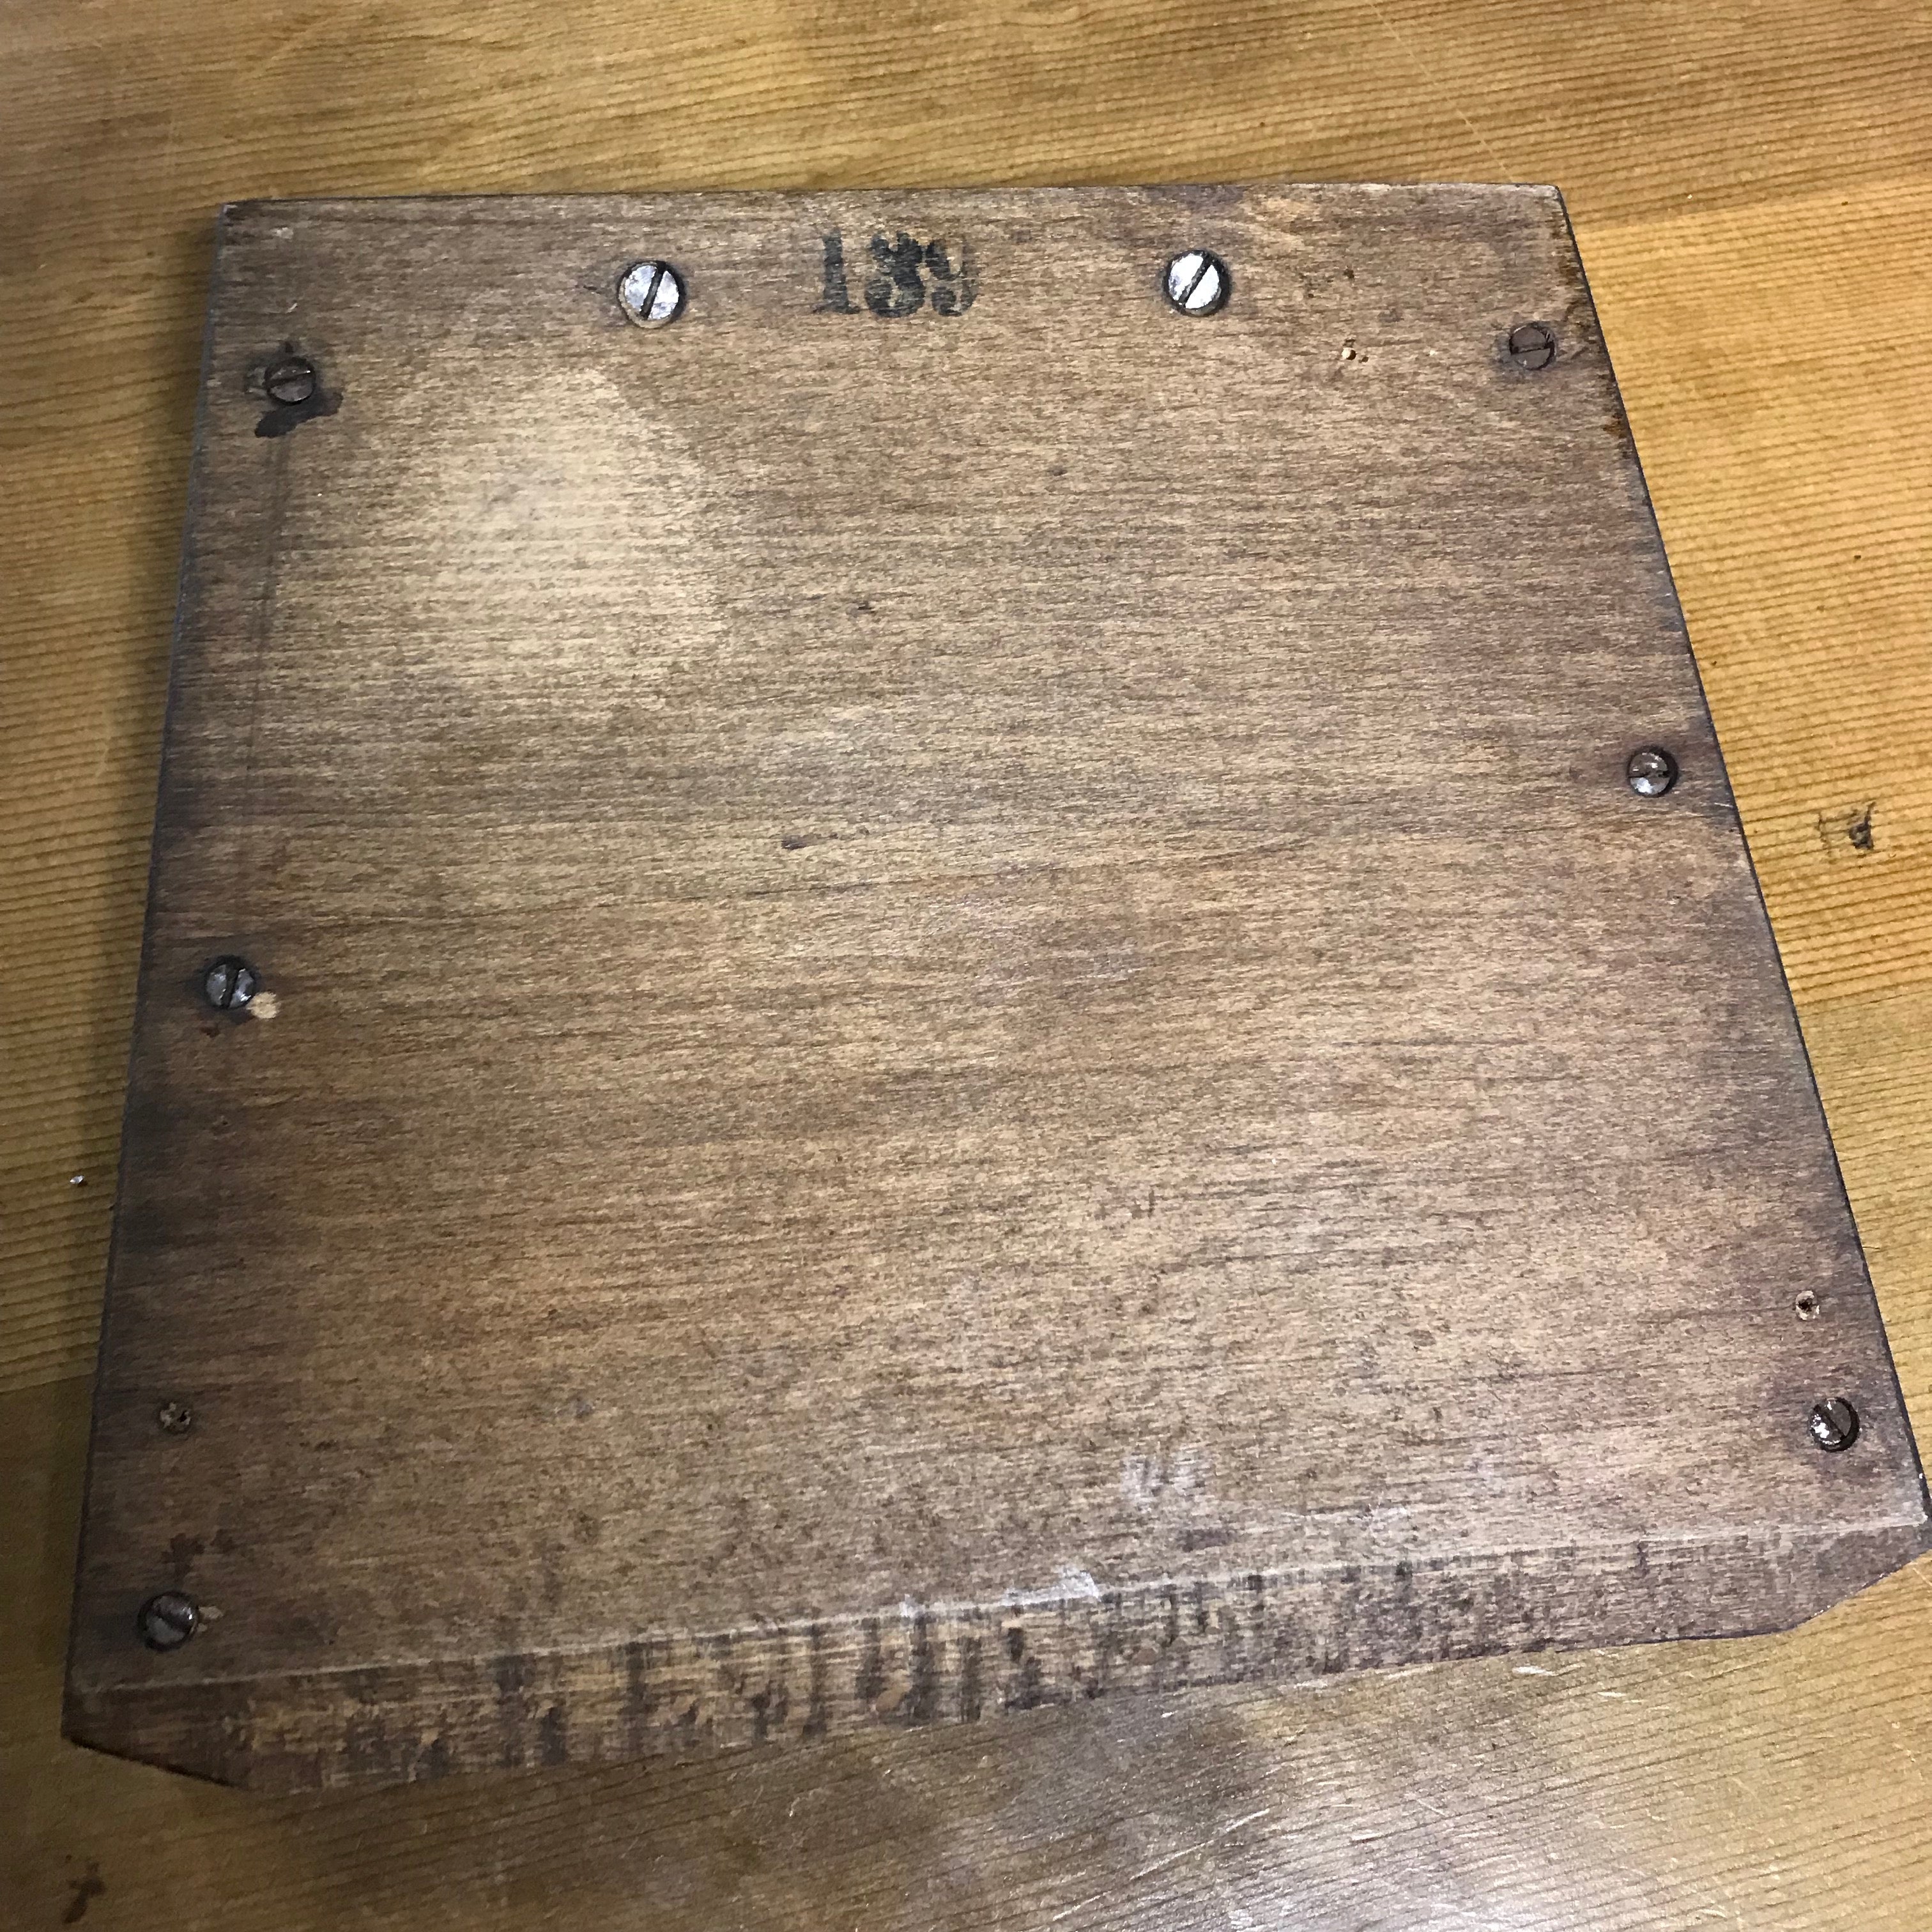 Wooden Crumb Tray